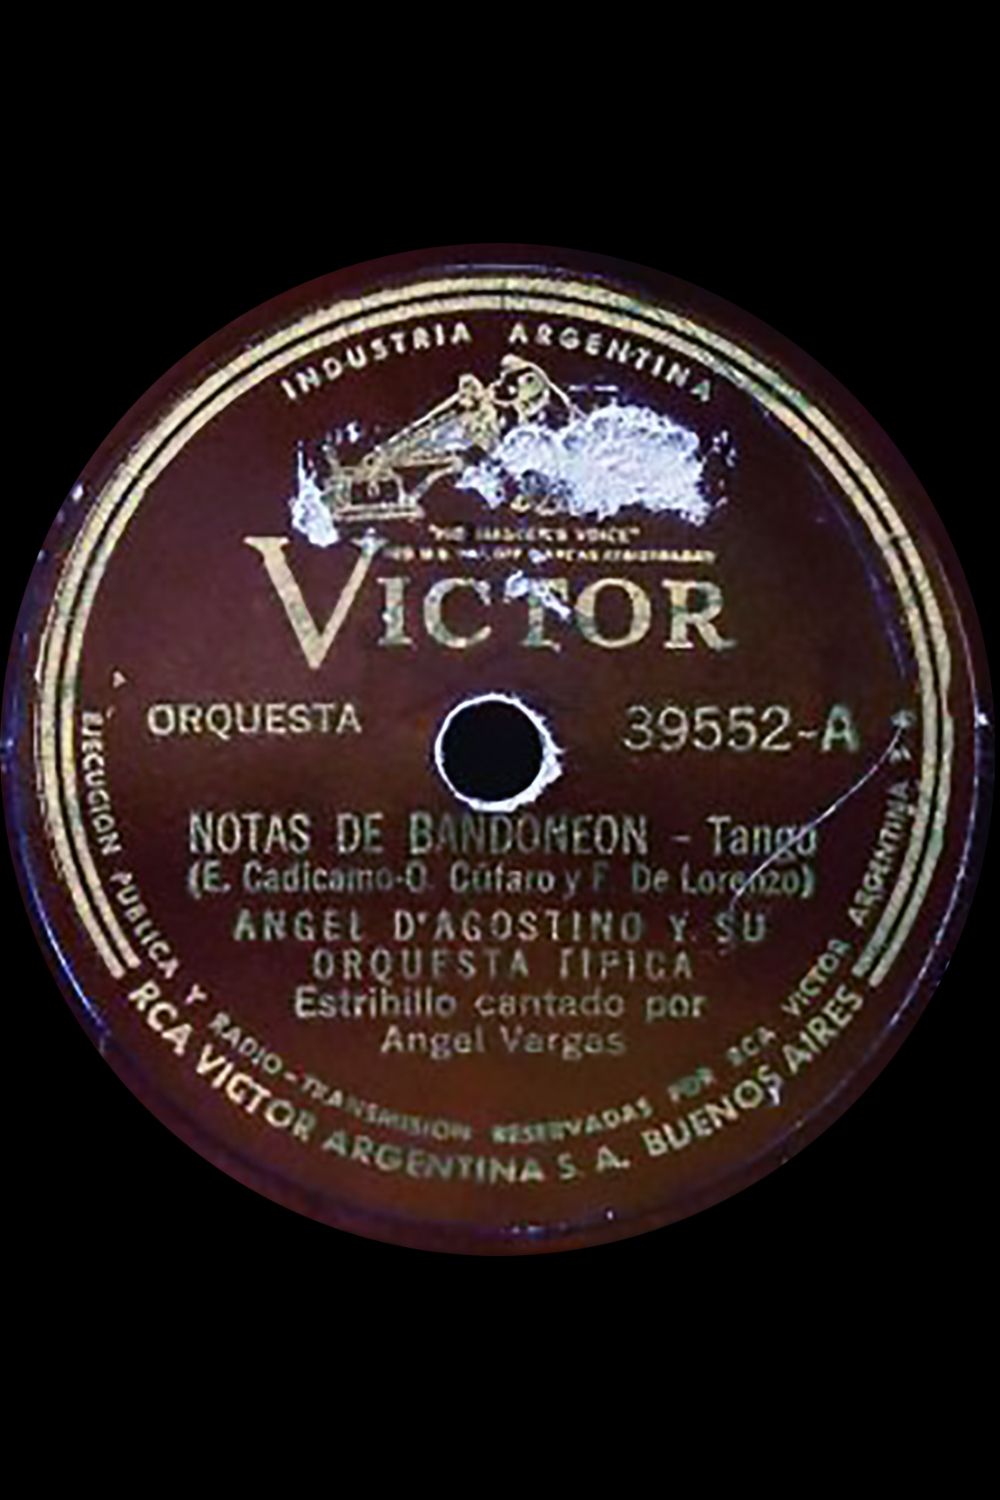 "Notas de bandoneón", disco vinilo del tango.